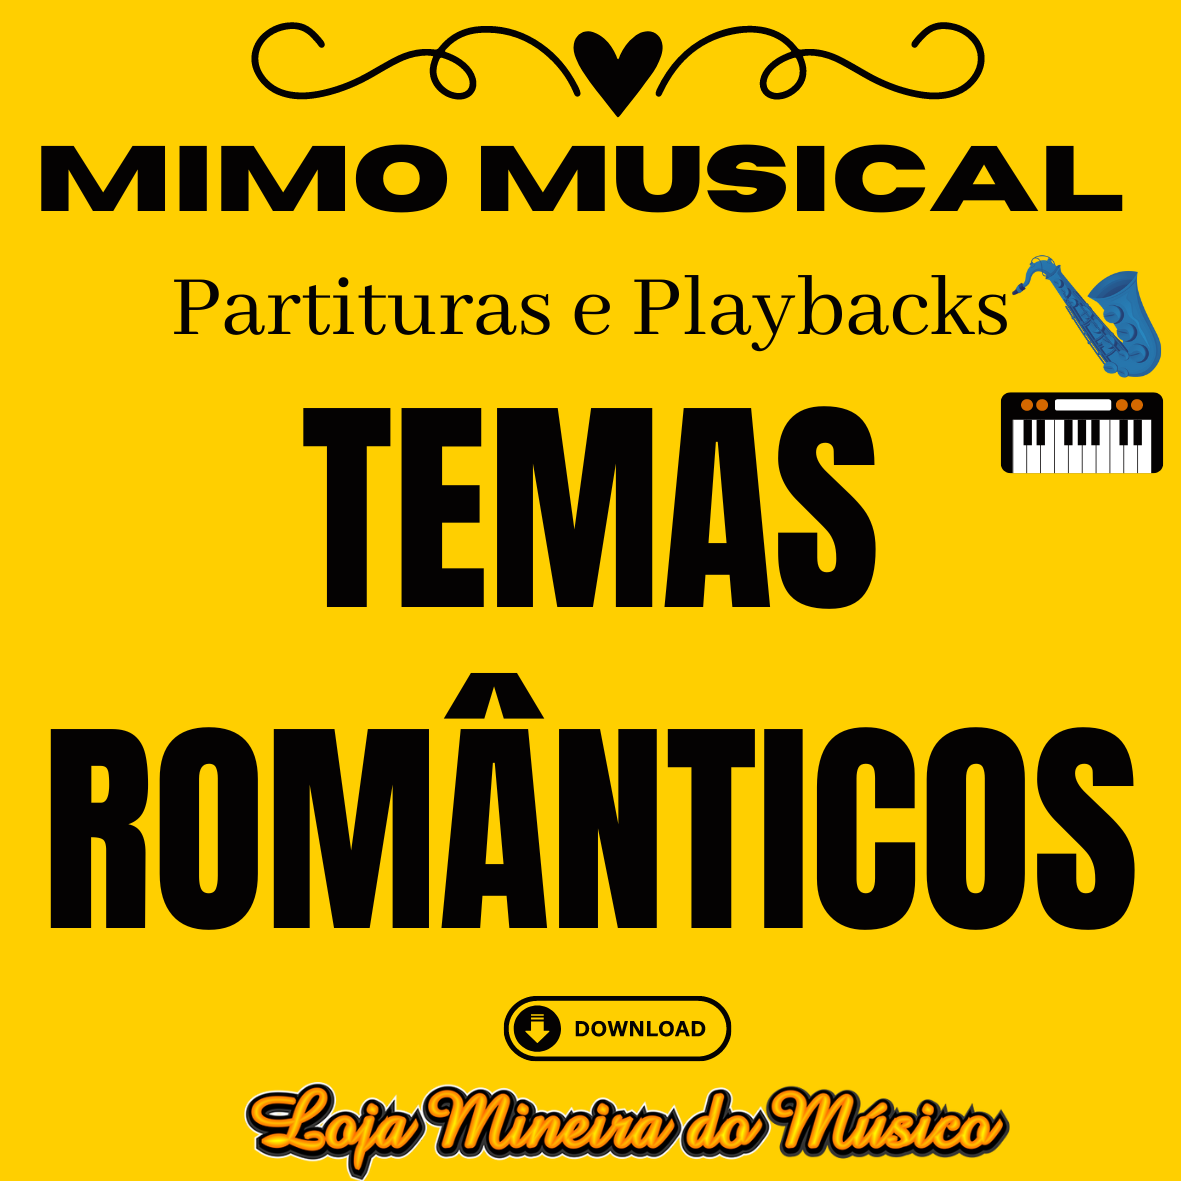 MIMO MUSICAL Temas Românticos | Partituras Românticas Populares Instrumentais Internacionais e Brasileiras com Playbacks sendo Partituras C Bb Eb